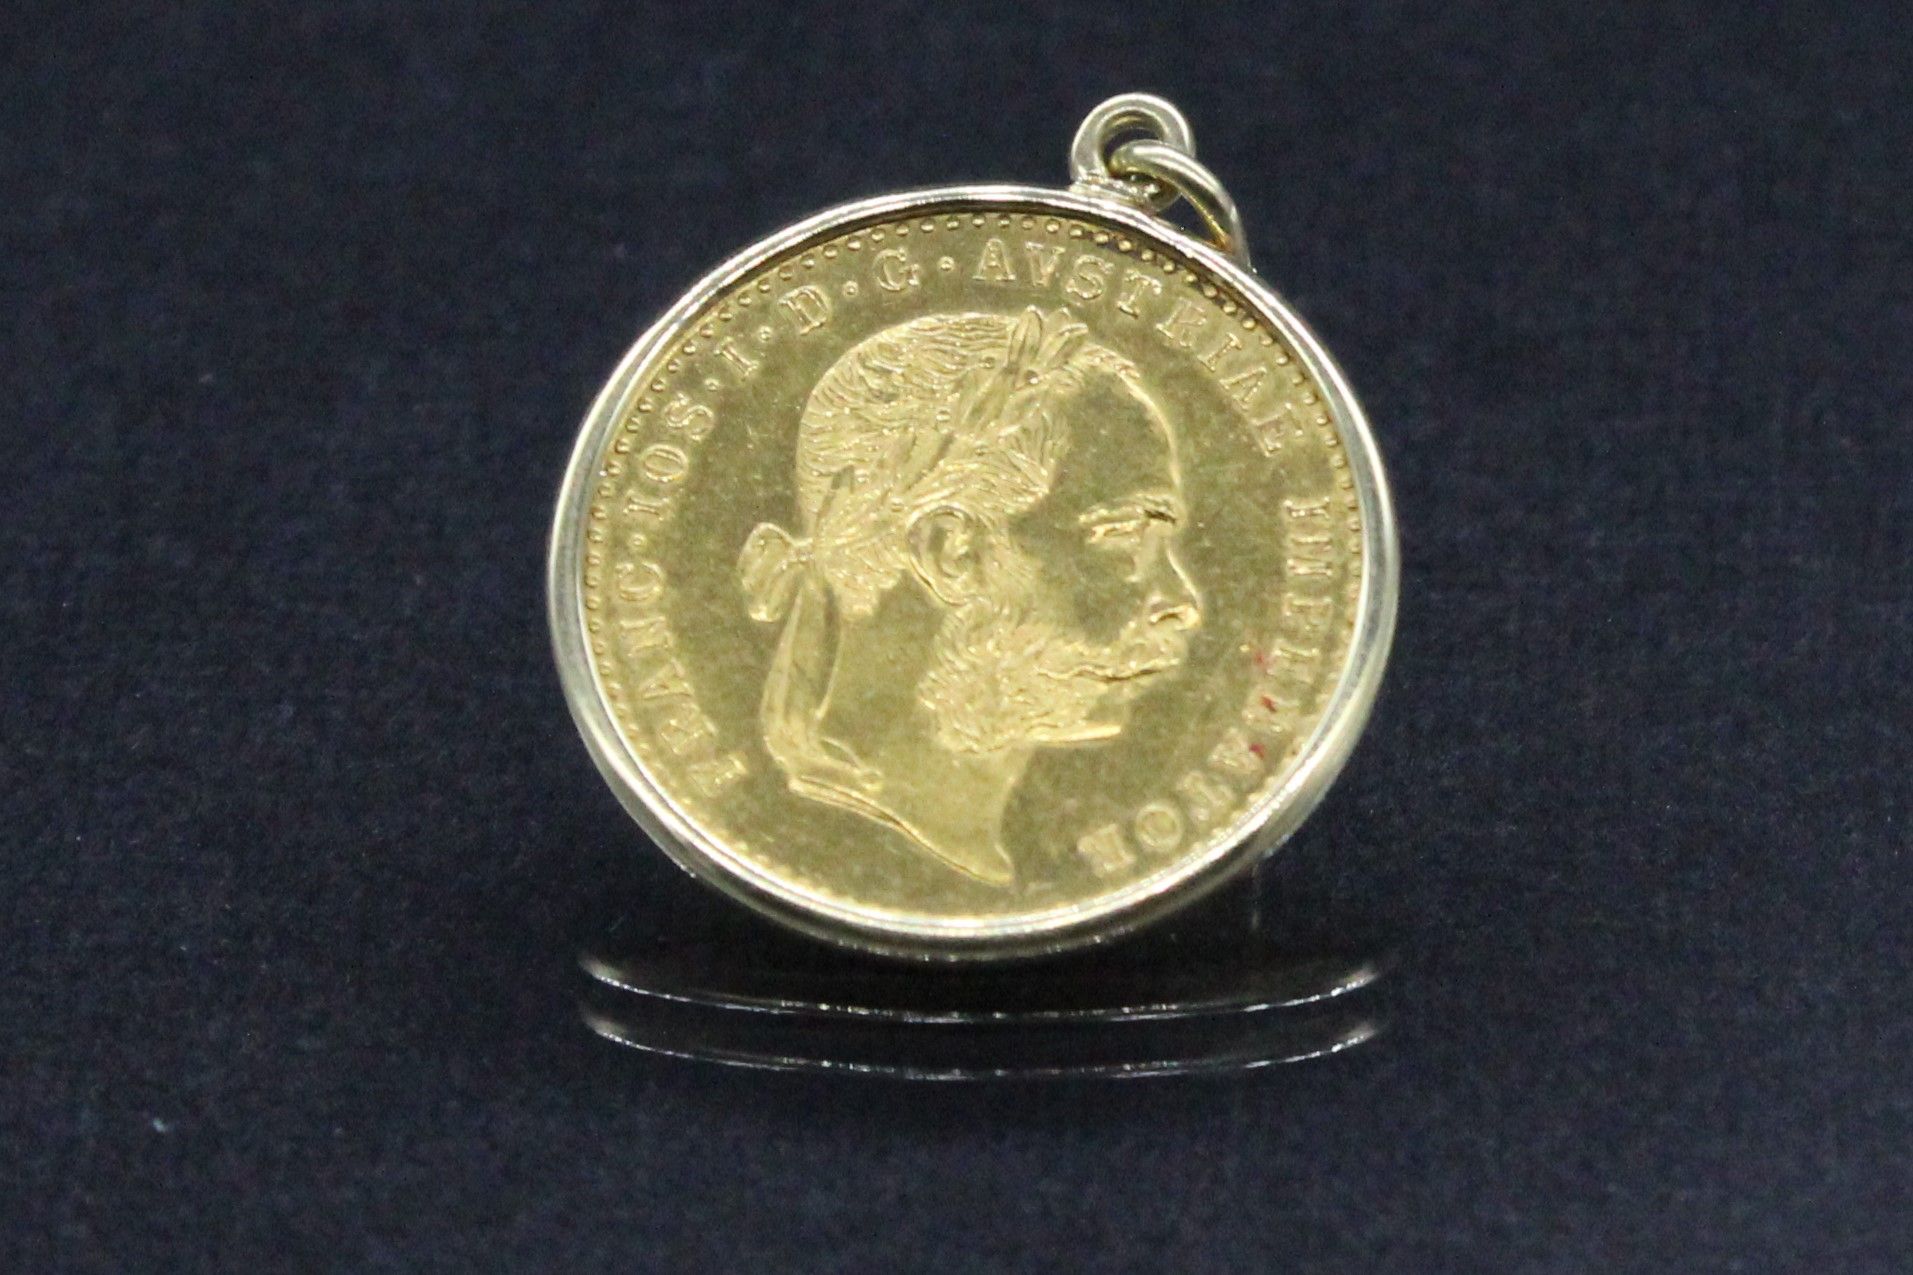 Null Pendente in oro giallo 14k (585) con 1 ducato Francesco Giuseppe I, 1915.

&hellip;